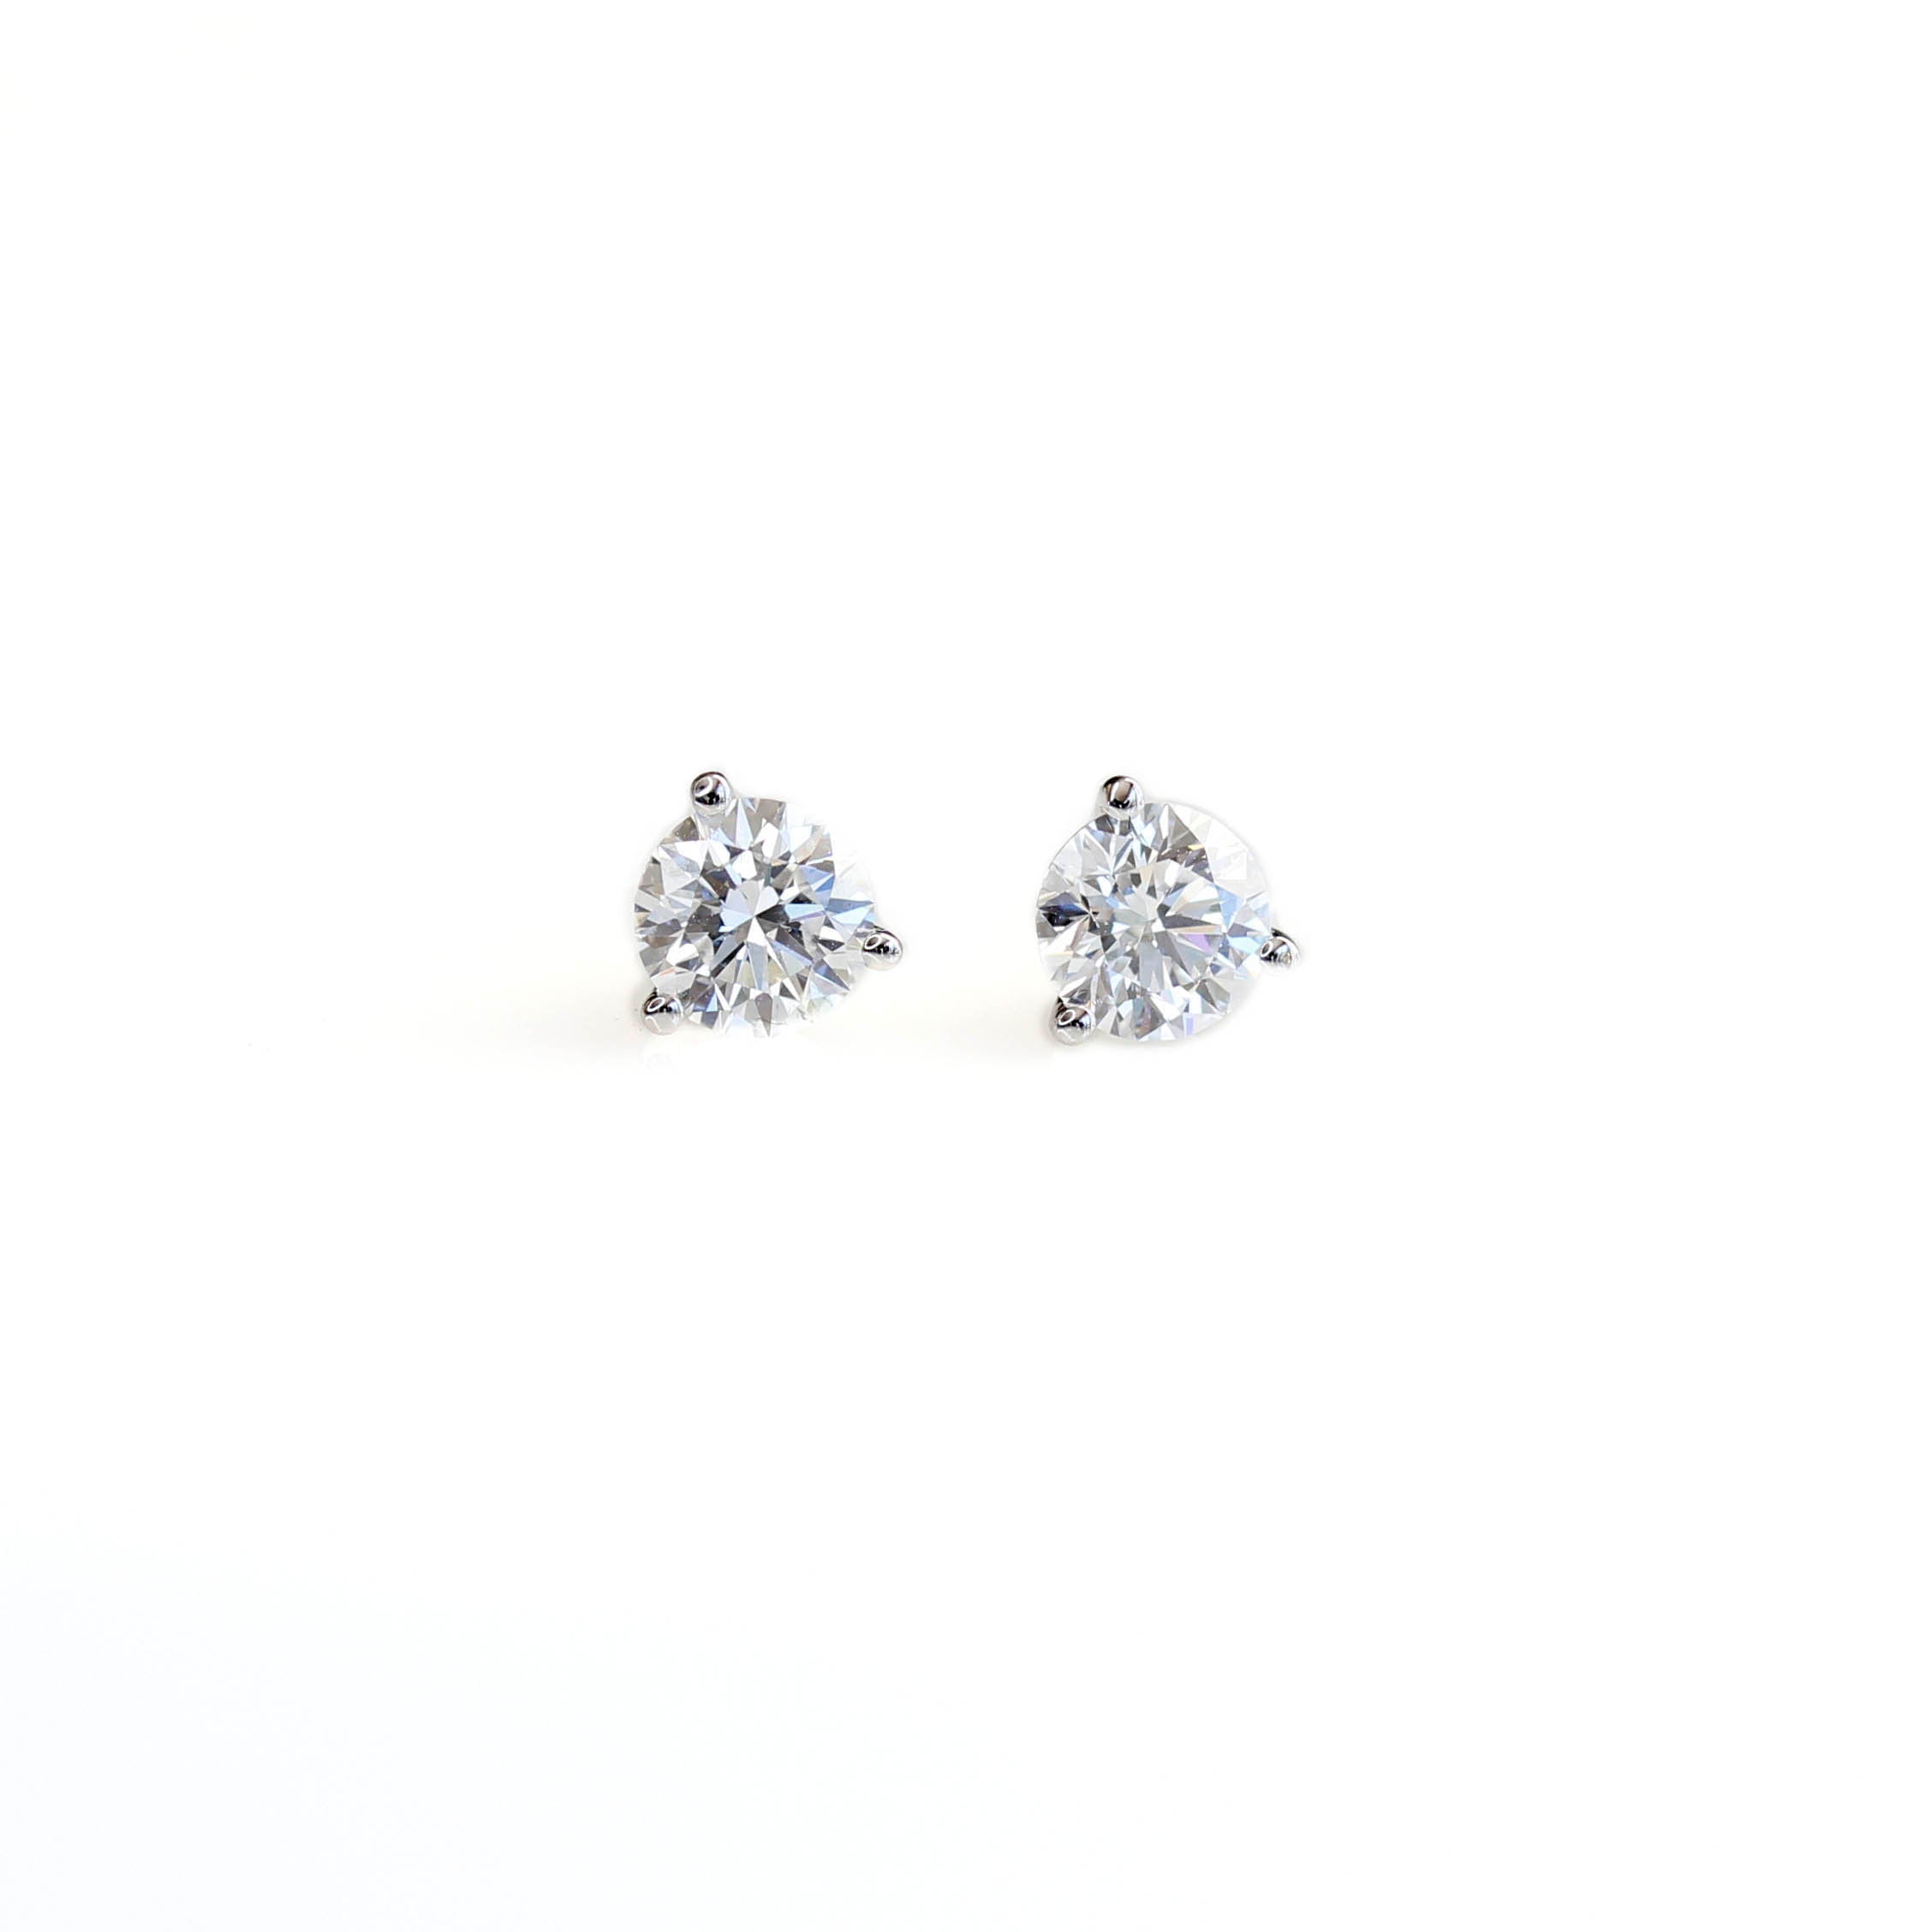 Lab-Grown Diamond Stud Earrings 1.74 carats total weight #STUDS-LG-1.74-1